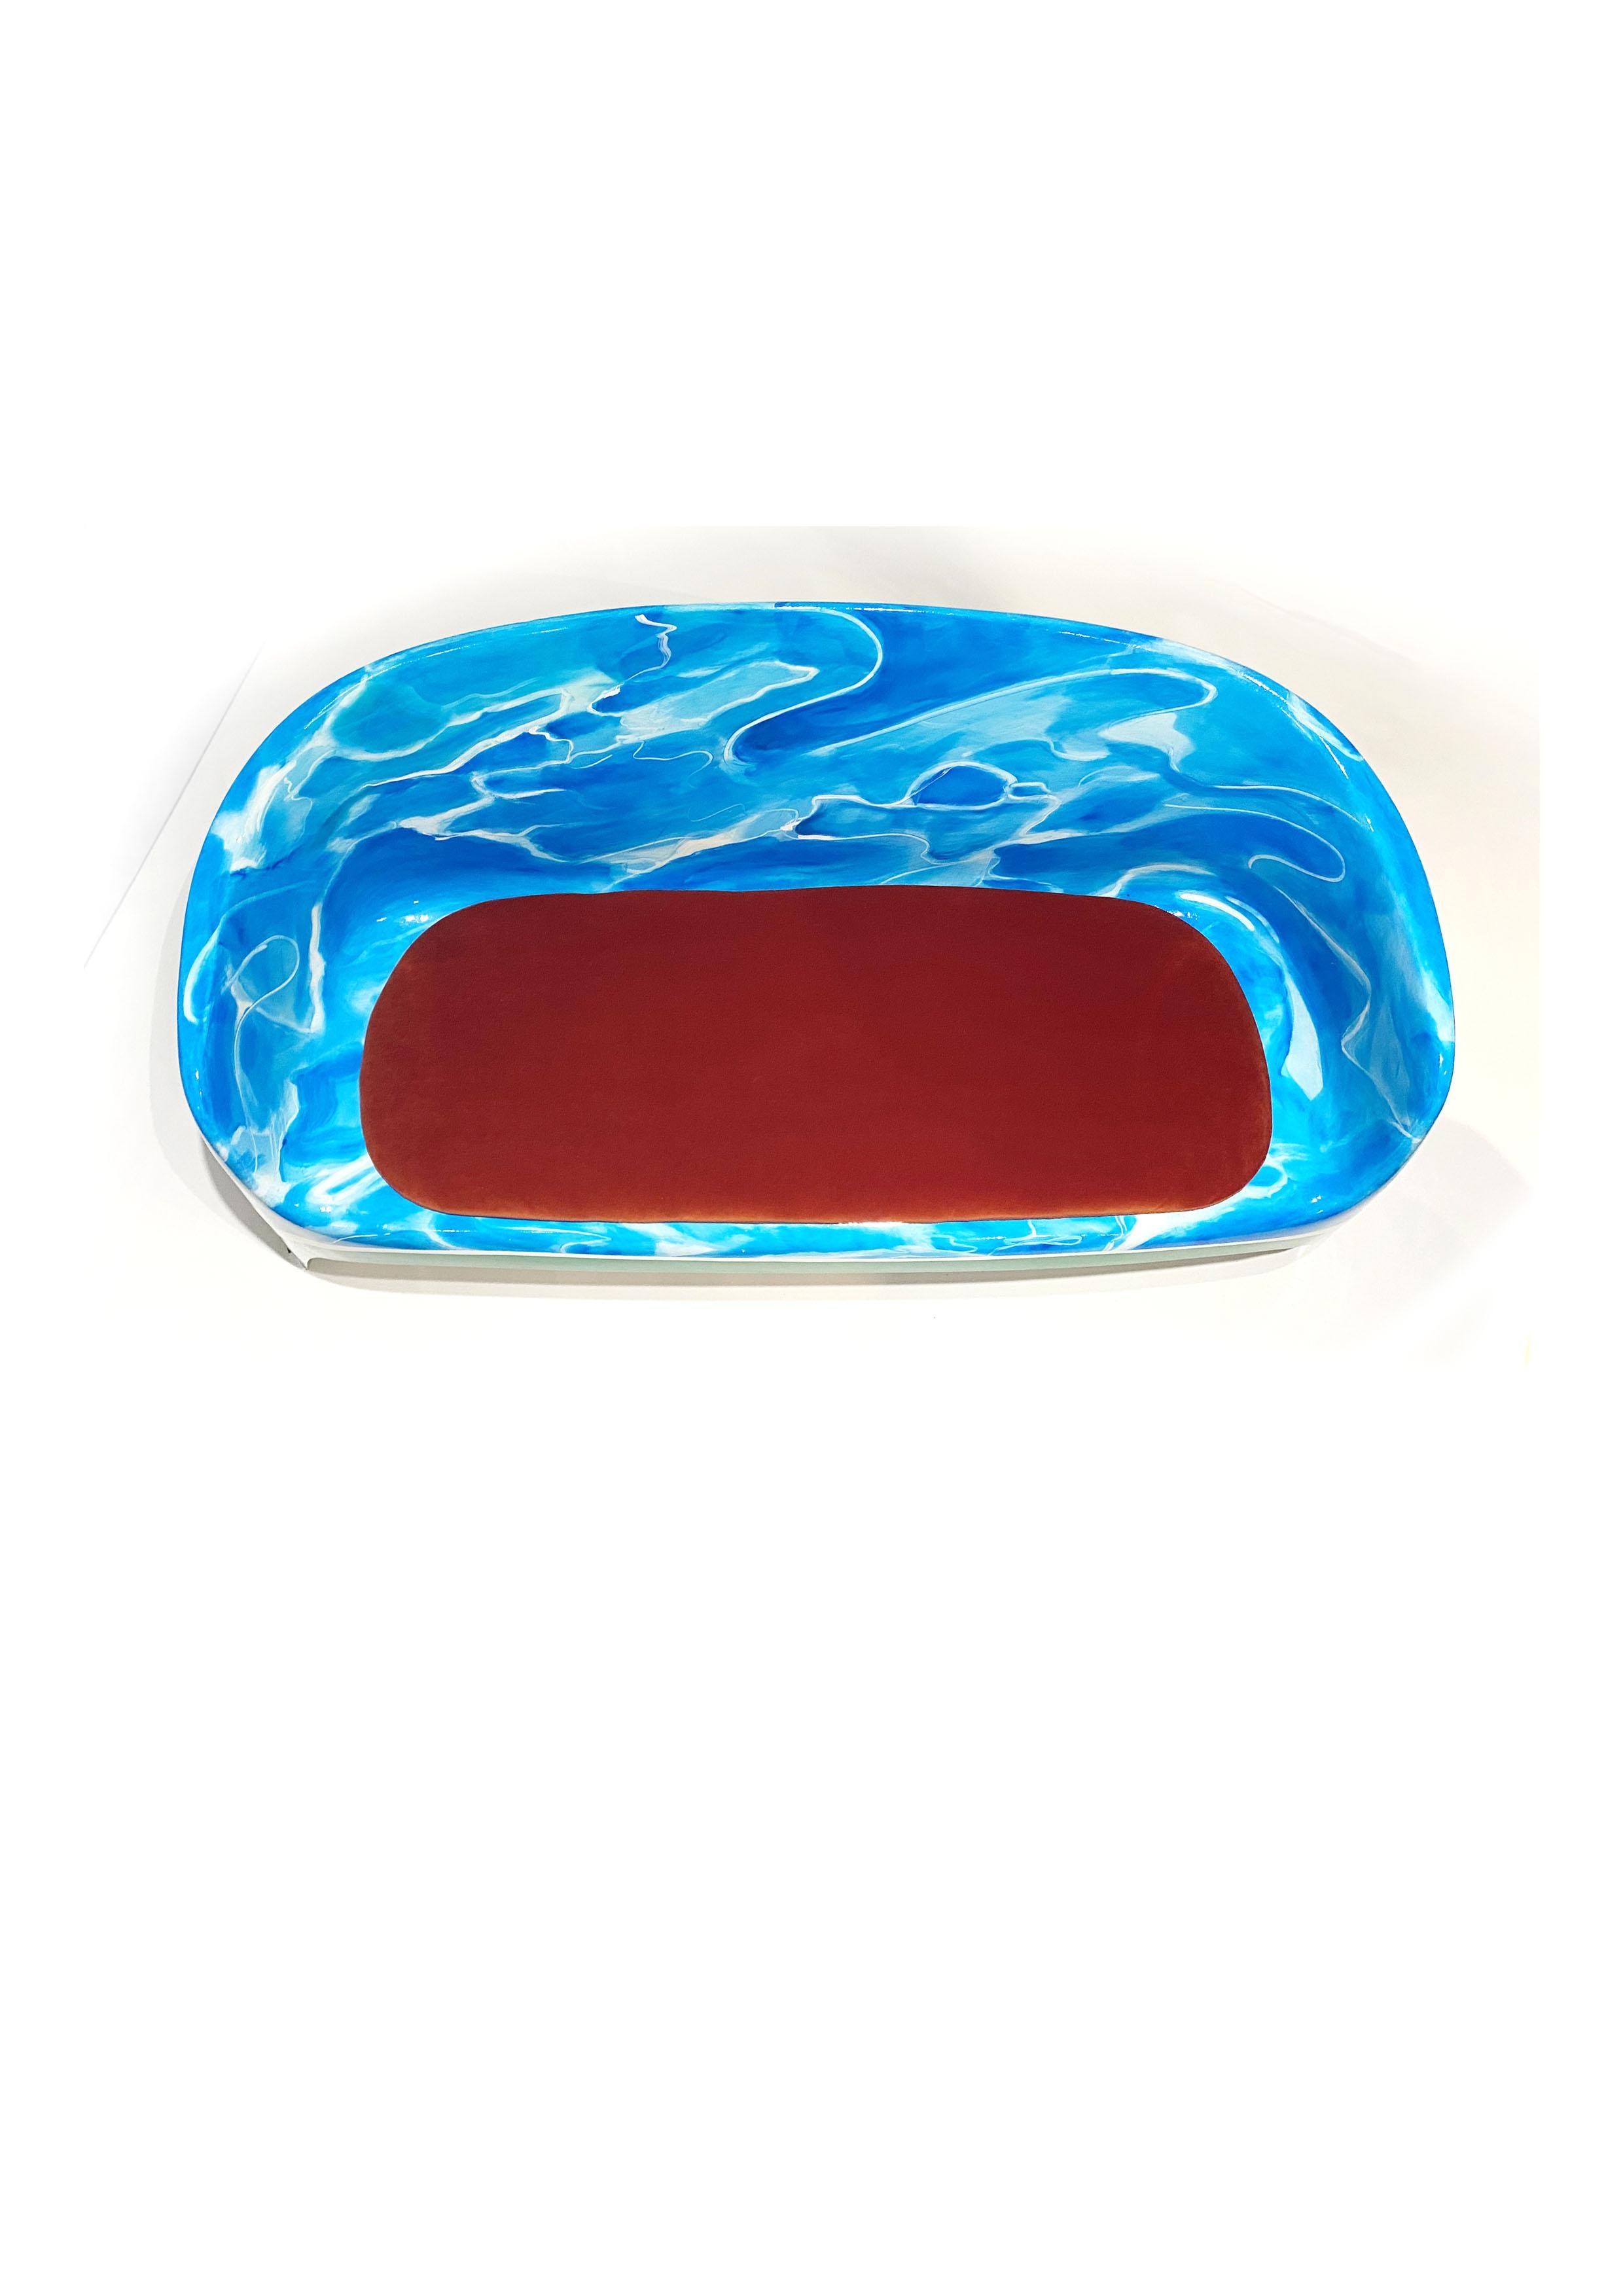 Fiberglass ELEMENT 00002 Swimming Bench 1 For Sale